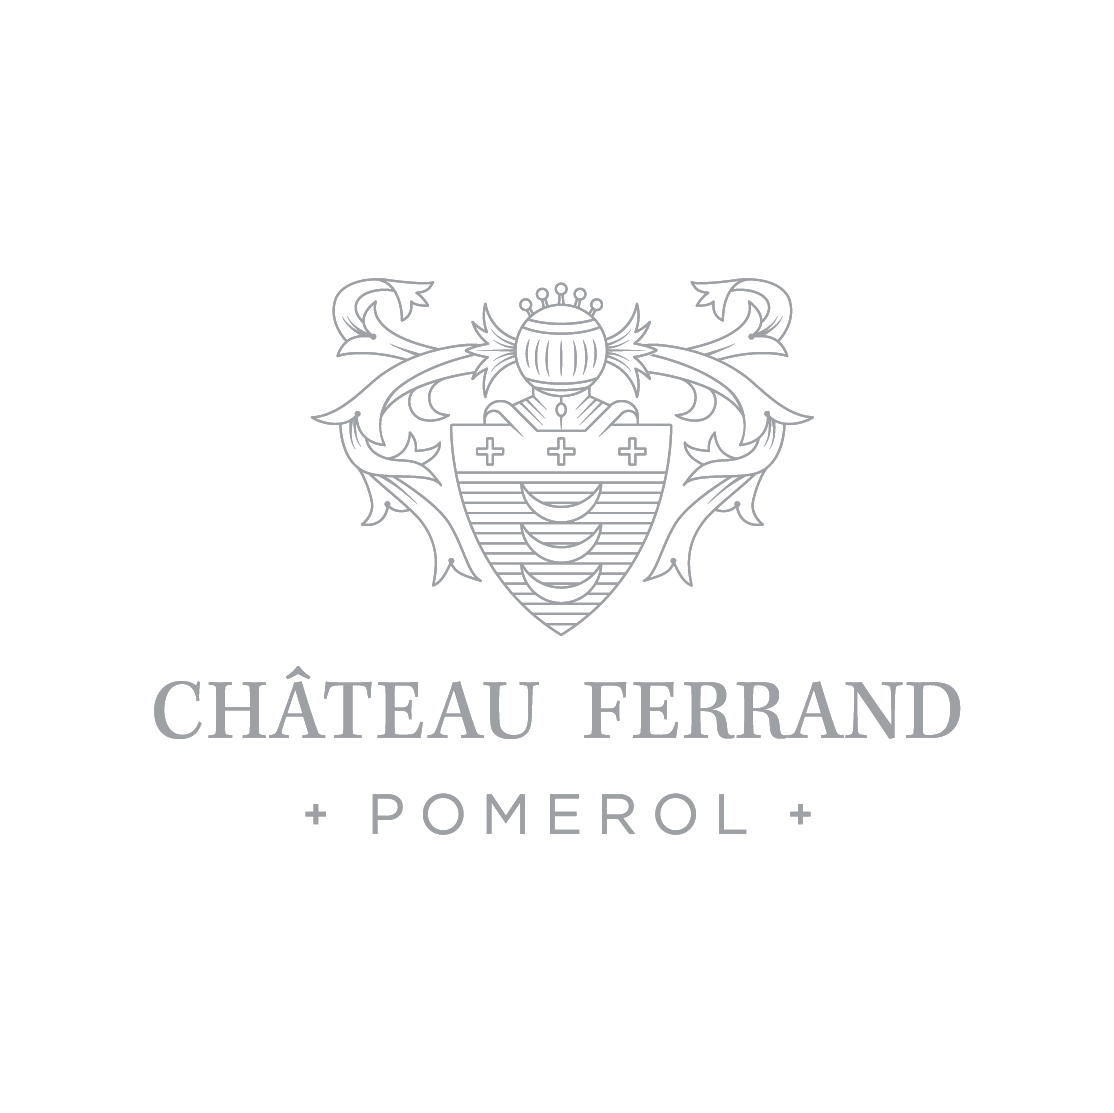 Château Ferrand